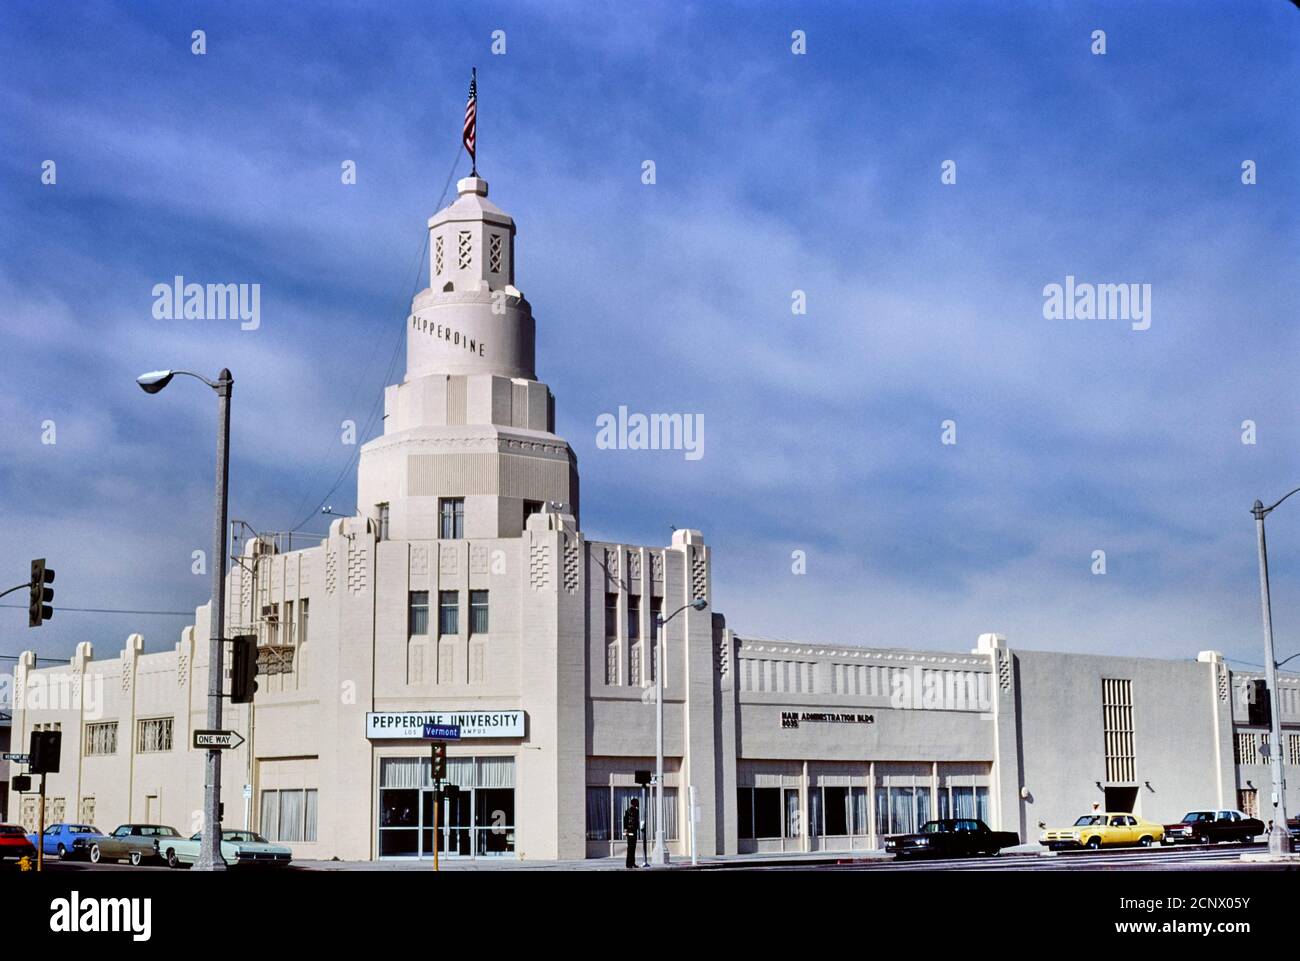 Pepperdine University, Los Angeles Campus, 81st & Vermont, Los Angeles, California, USA, John Margolies Roadside America Photograph Archive, 1977 Stock Photo